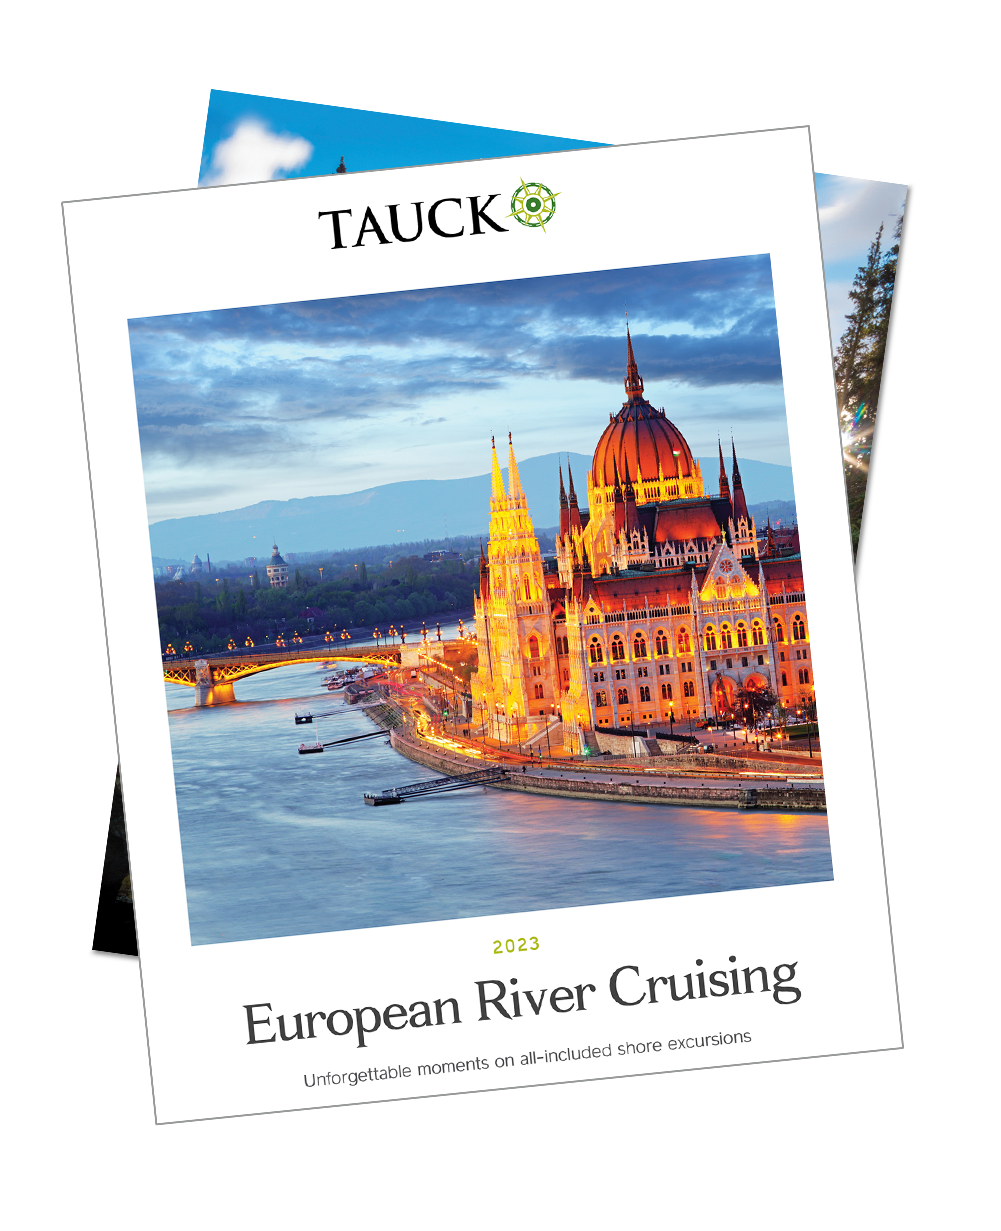 tauck river cruise ships 2023